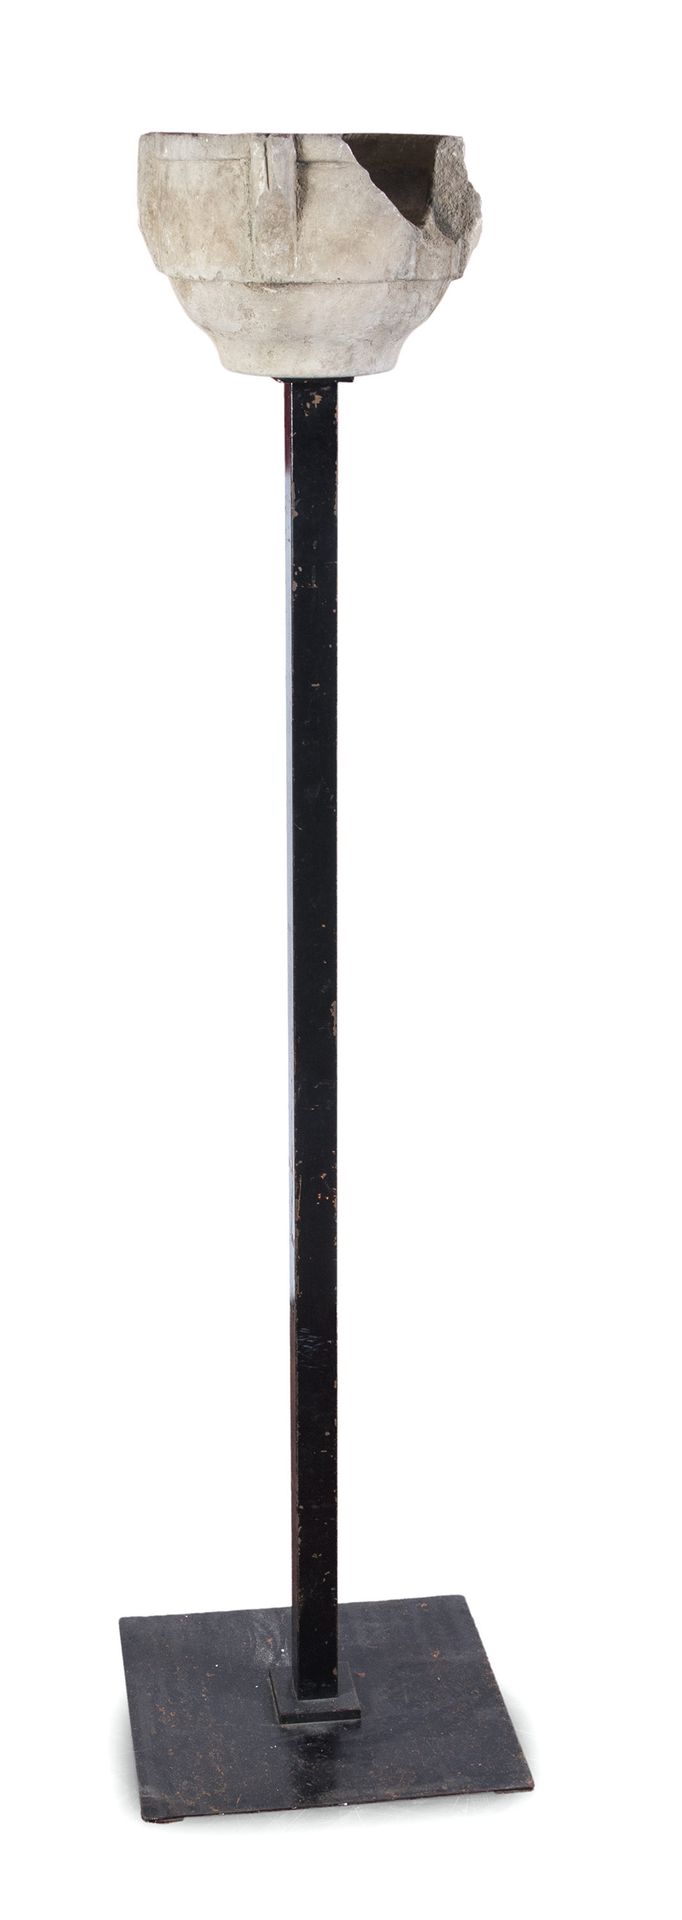 Null 石臼，可能来自哥特式时期

有四叶草。搁置在黑色漆面金属支架上。

迫击炮的尺寸，cm. 23 x 30 x 30。

总高度：184厘米。

一侧明&hellip;